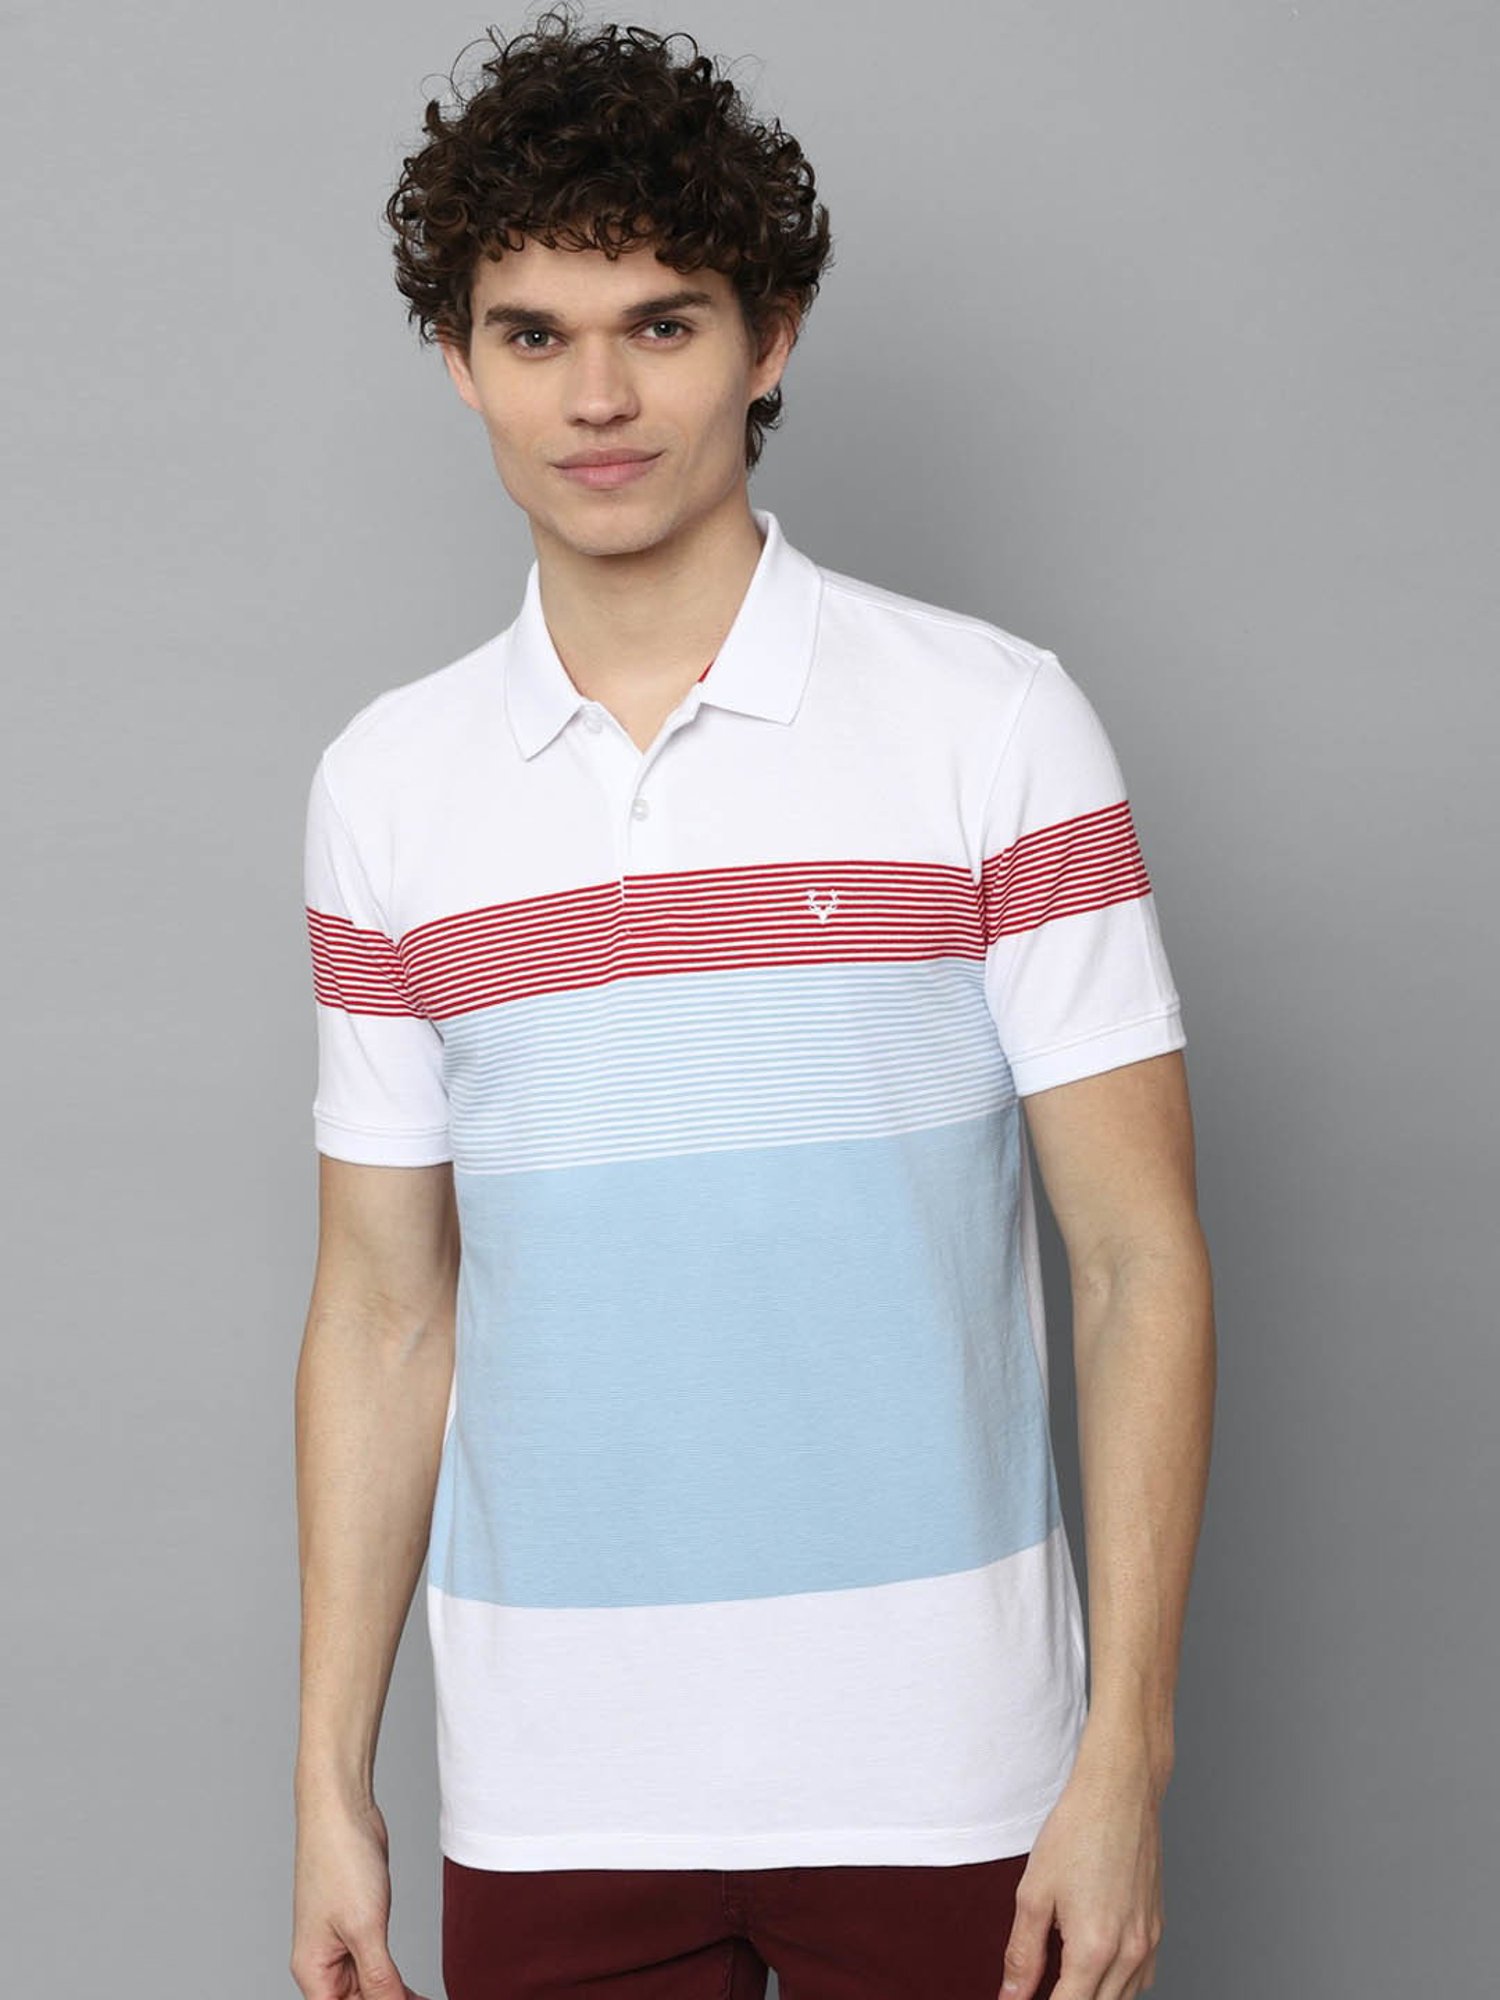 Allen solly shirt | Shirts, Mens shirts, Stylish shirts men